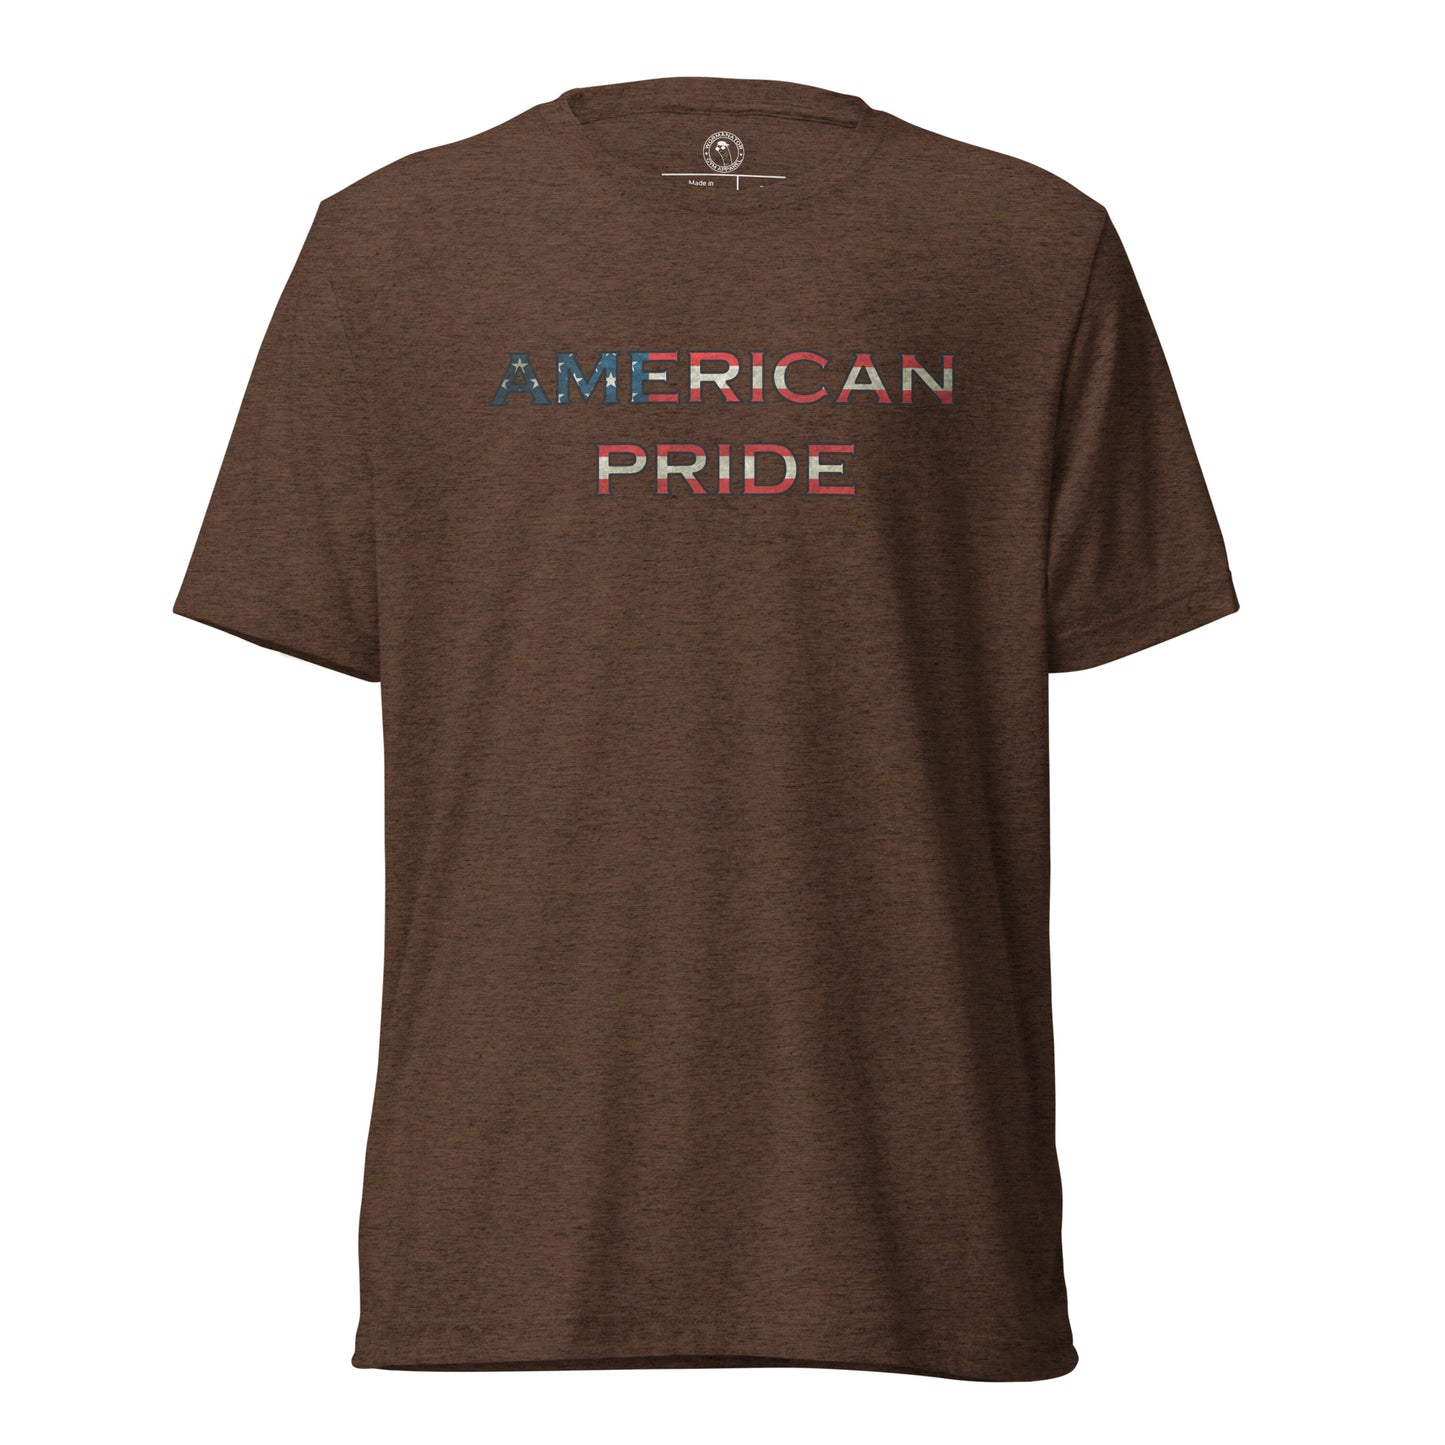 American Pride T-Shirt in Brown Triblend